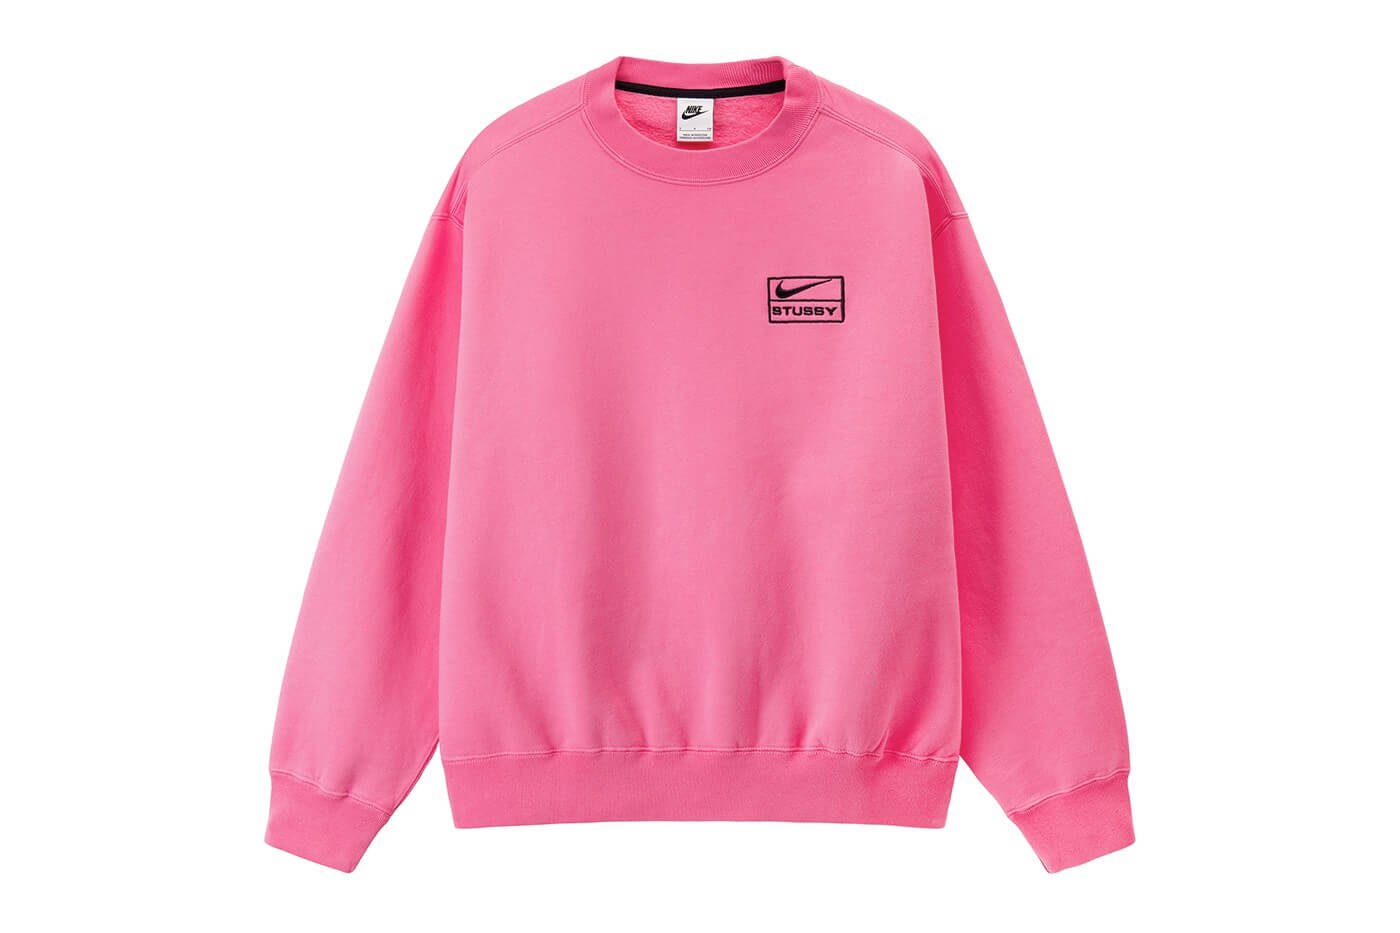 CNK-nike-stussy-apparel-collection-pink-crewneck.jpeg